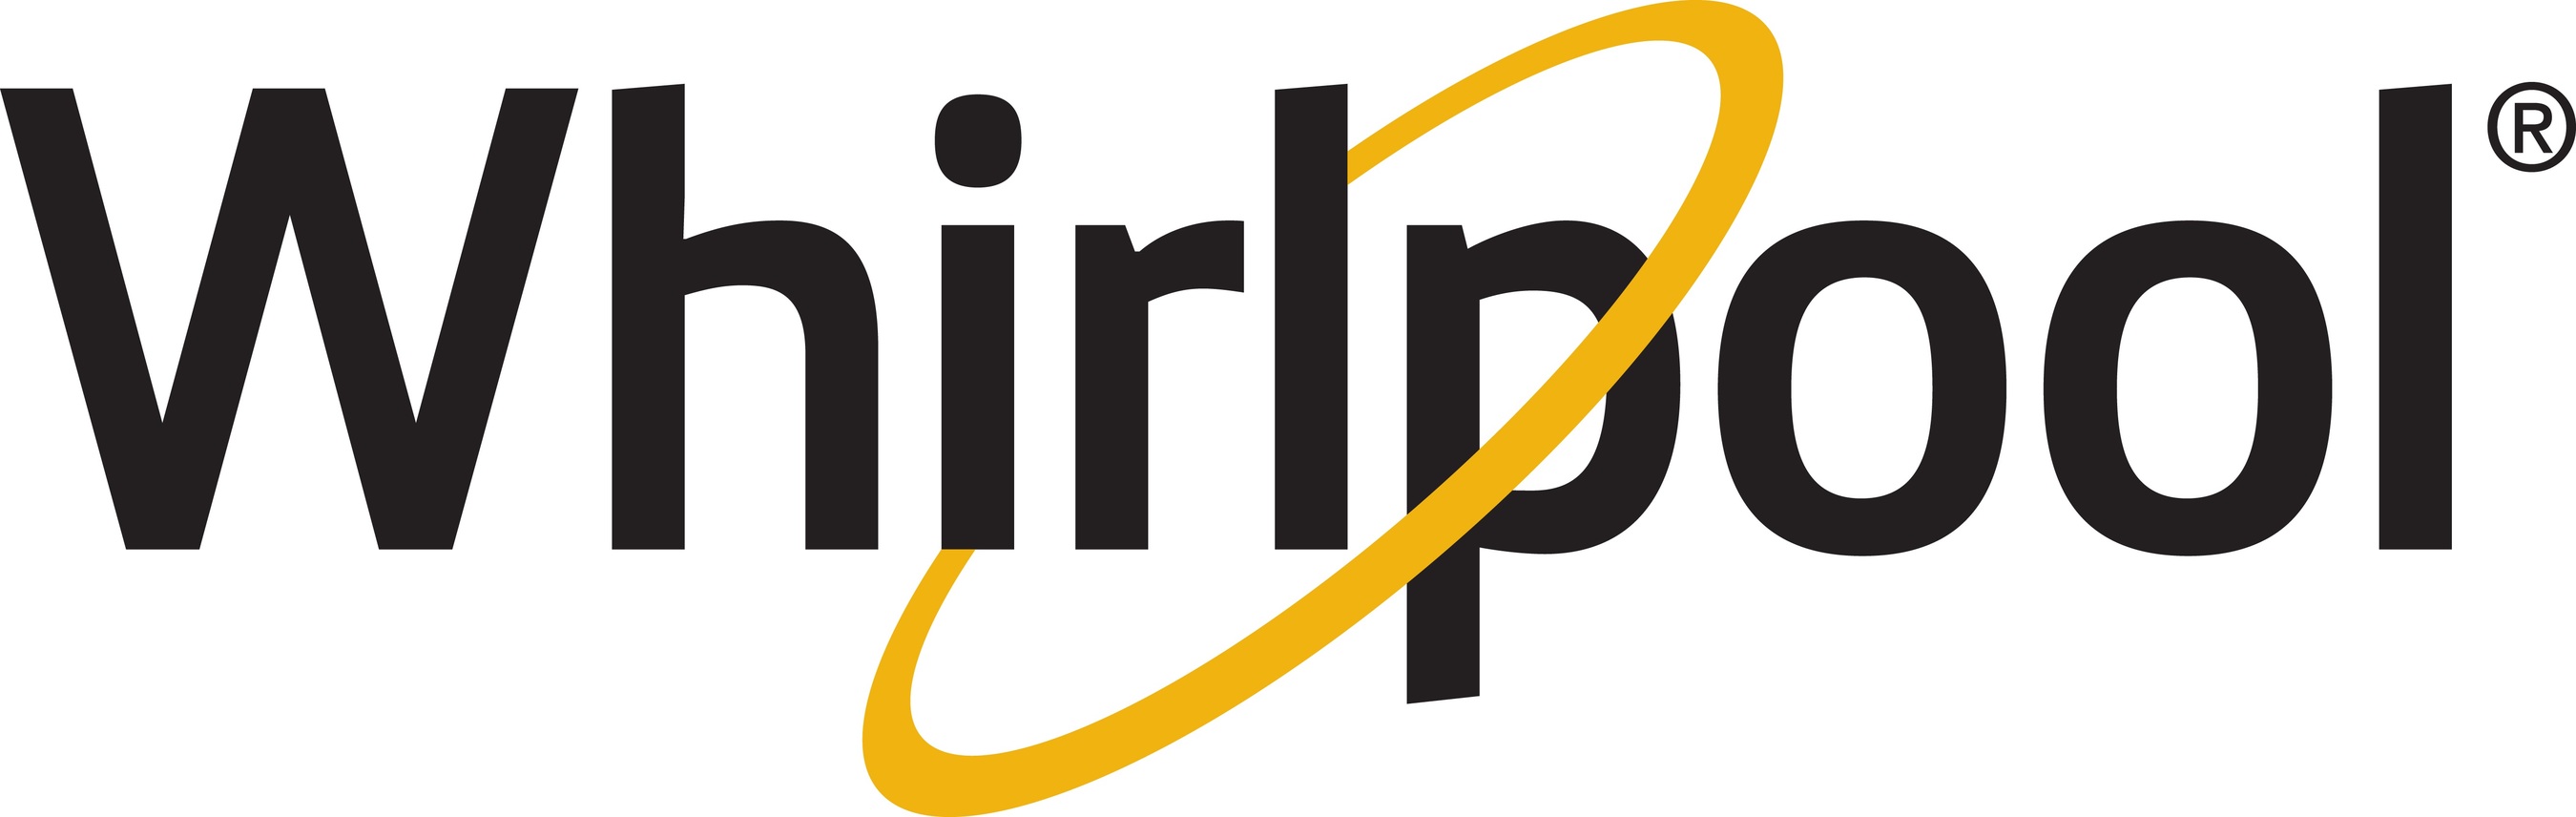 Whirlpool Corporation (PRNewsFoto/Whirlpool Corporation) (PRNewsFoto/Whirlpool Corporation)